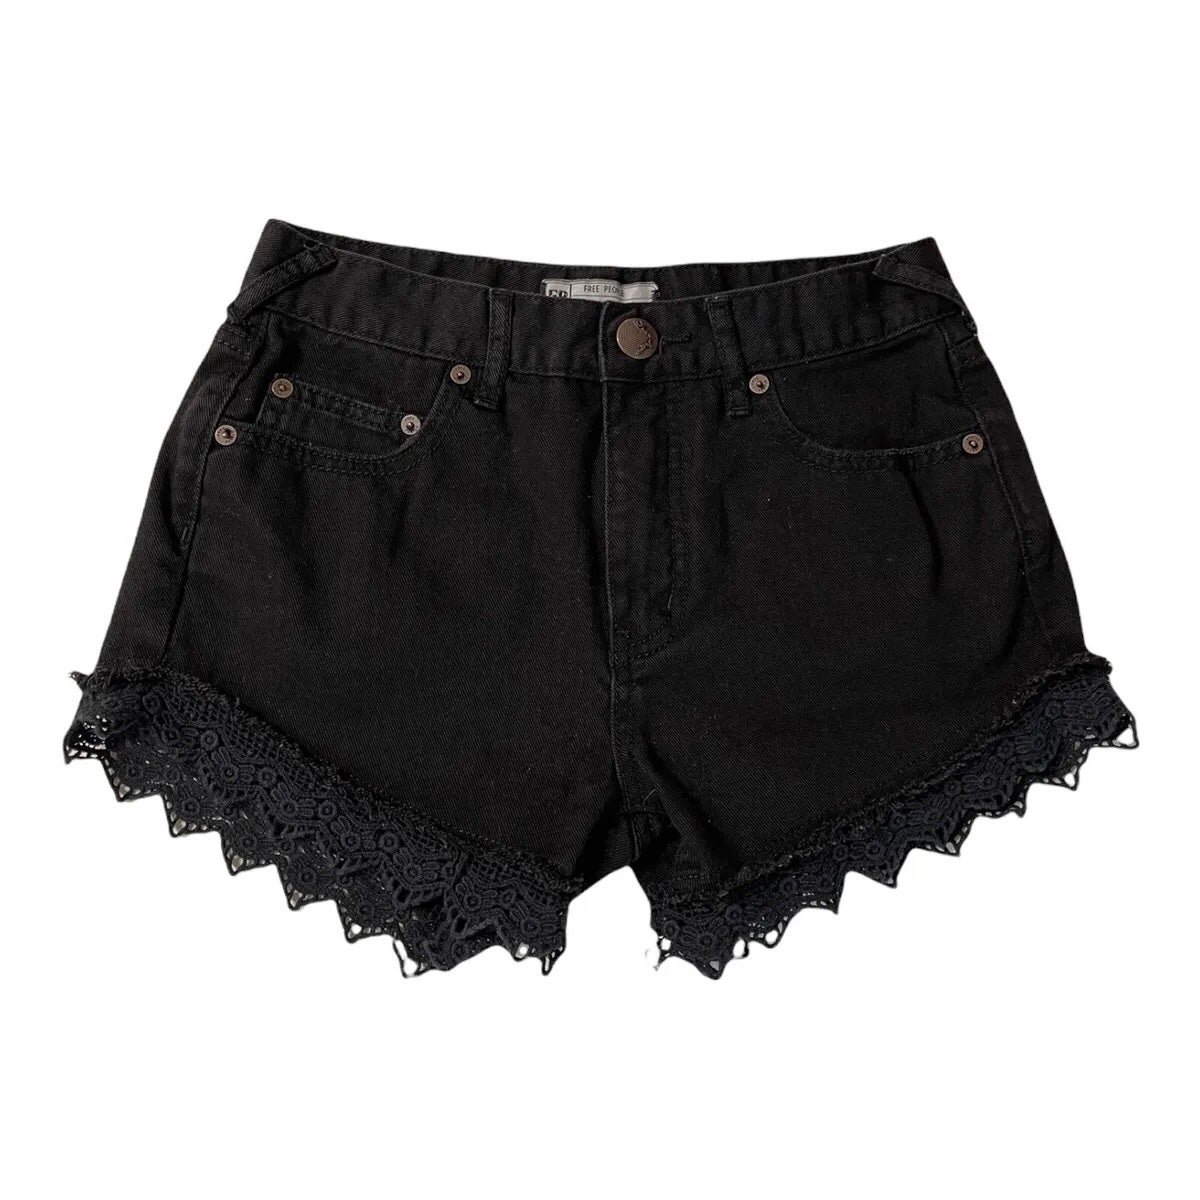 Stylish Free People Lacey Denim Cutoff Shorts in Black 